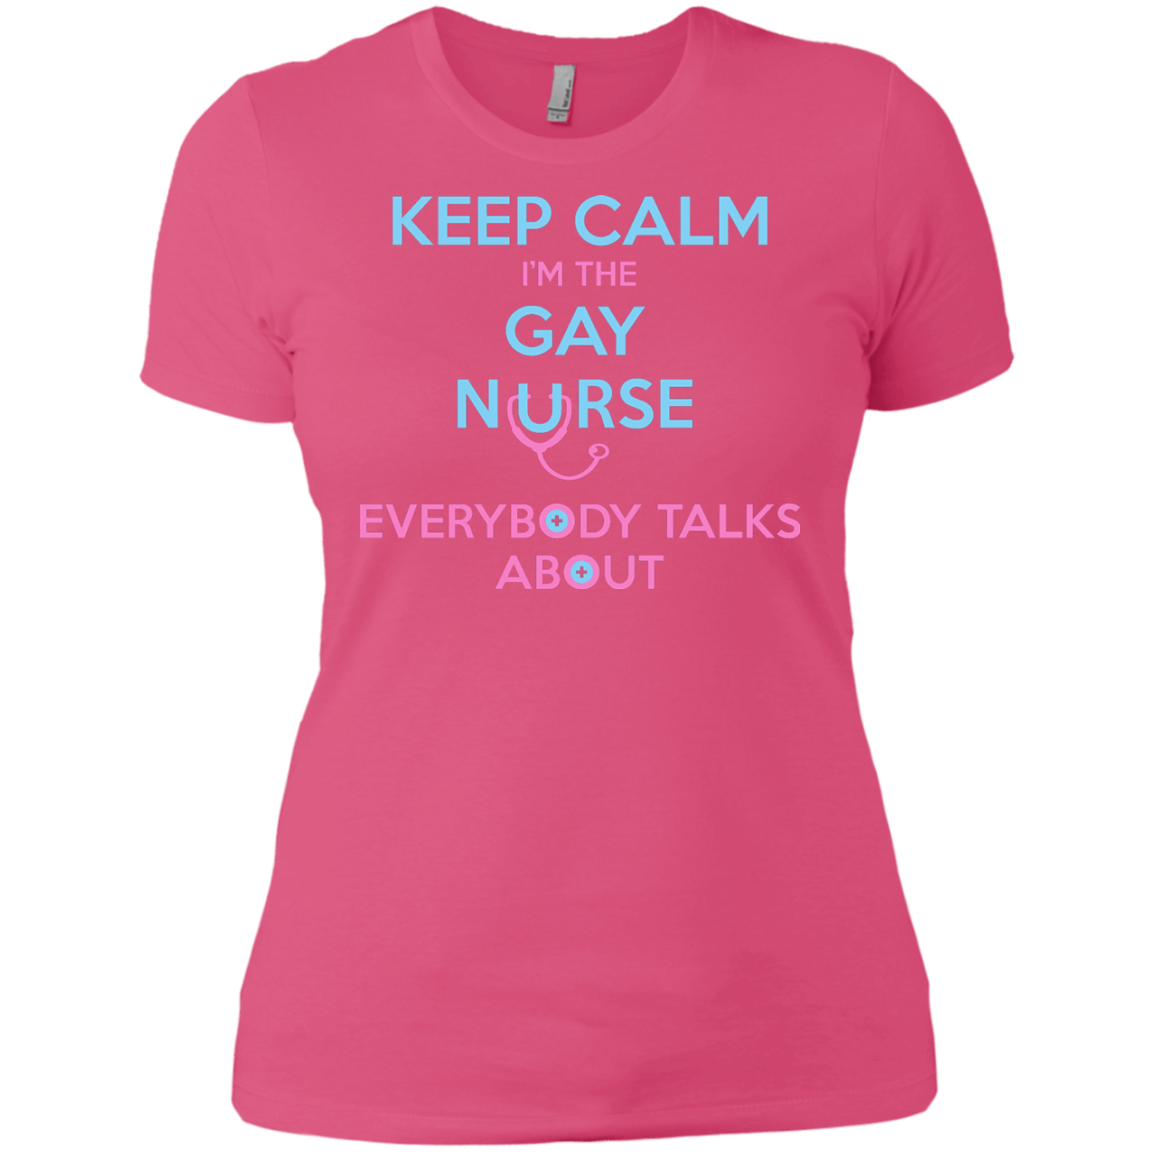 Keep Calm I'm The Gay Nurse pink round neck tshirt for women